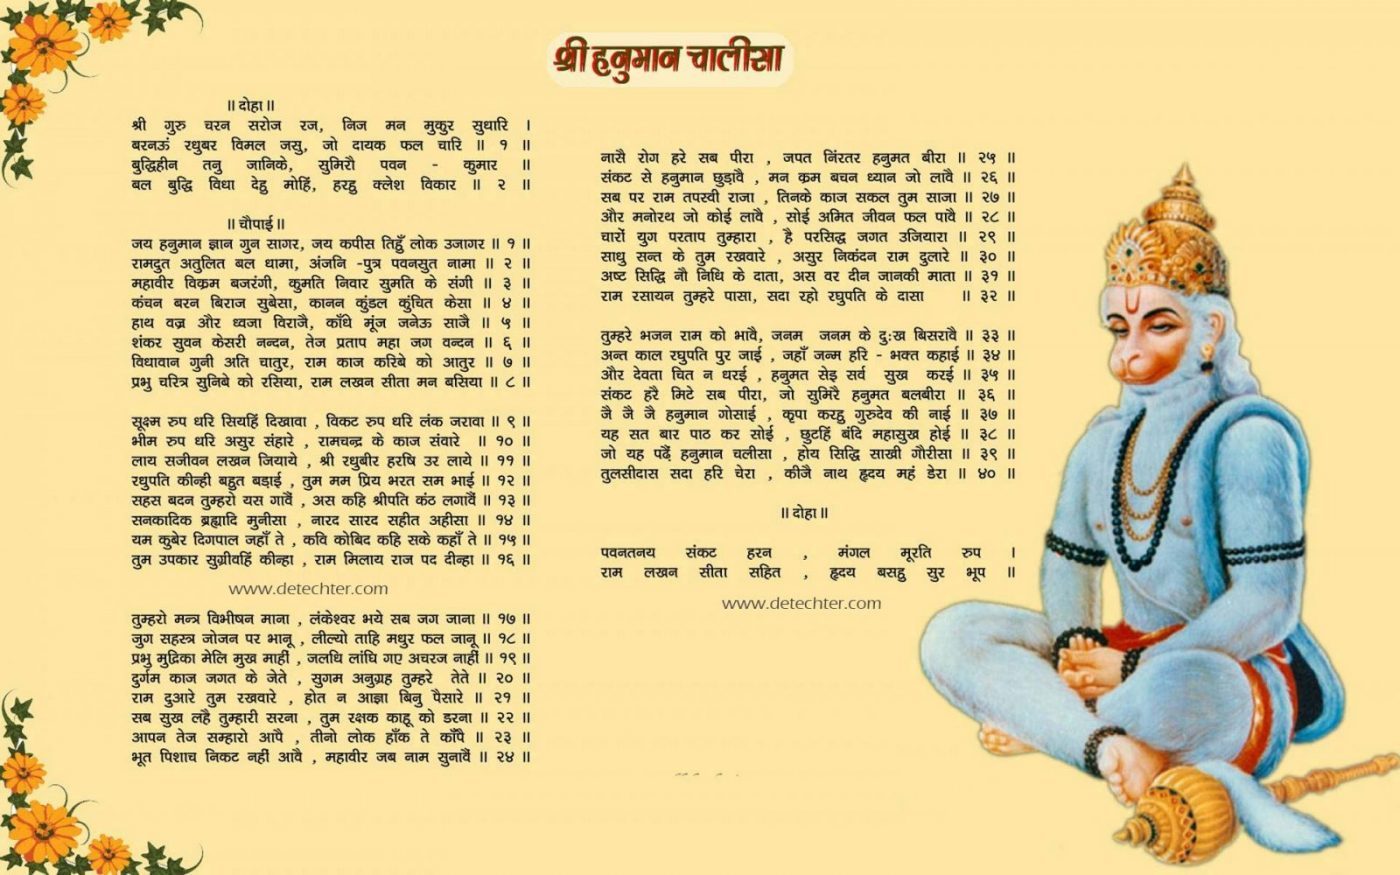 hanuman chalisa lyrics in gujarati